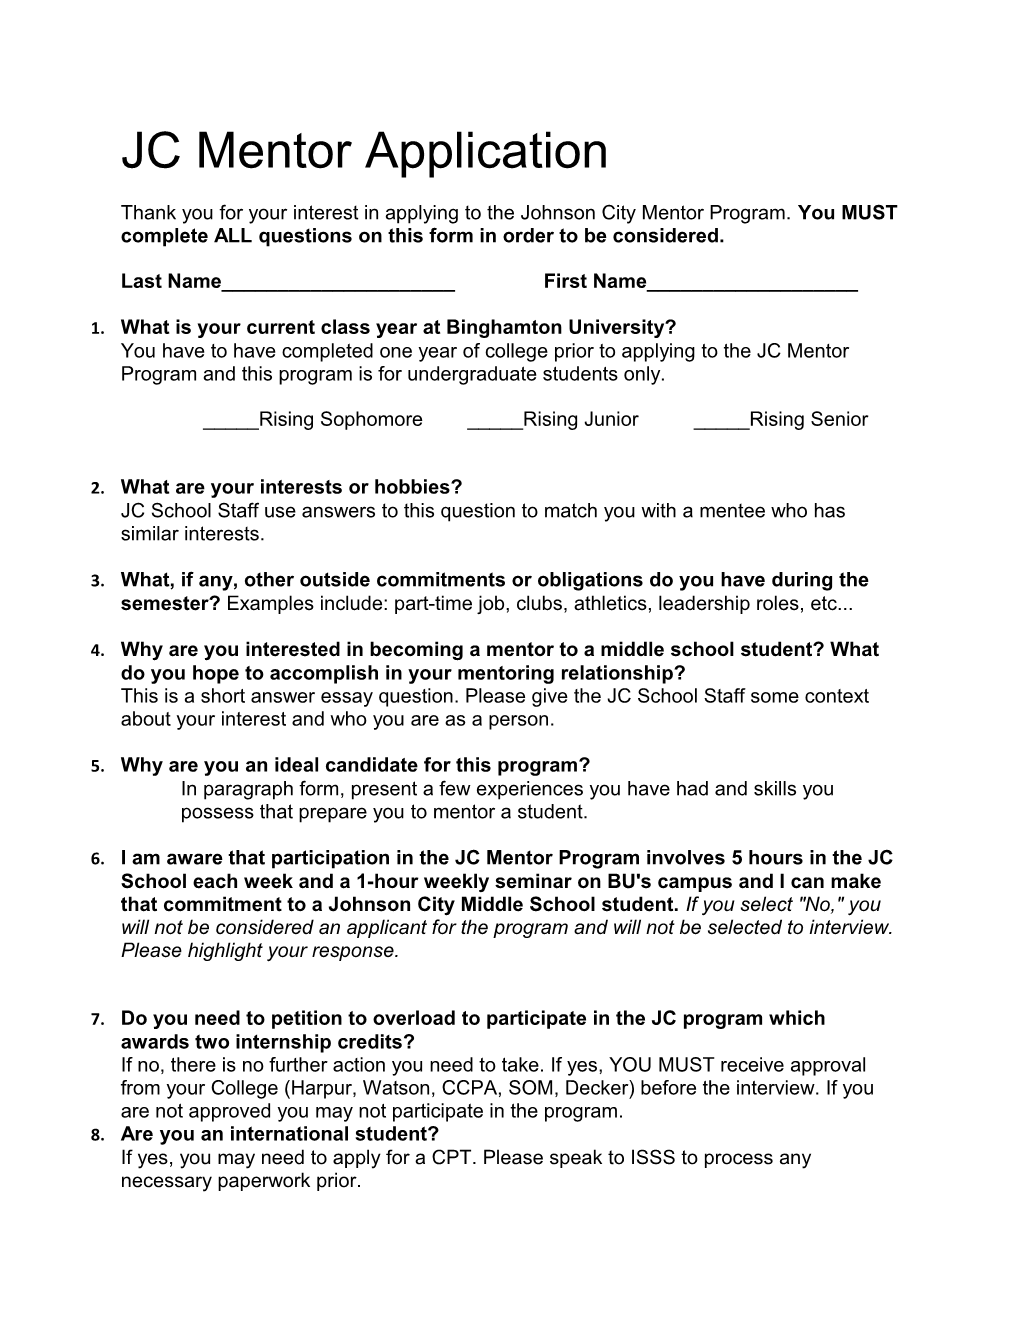 JC Mentor Application